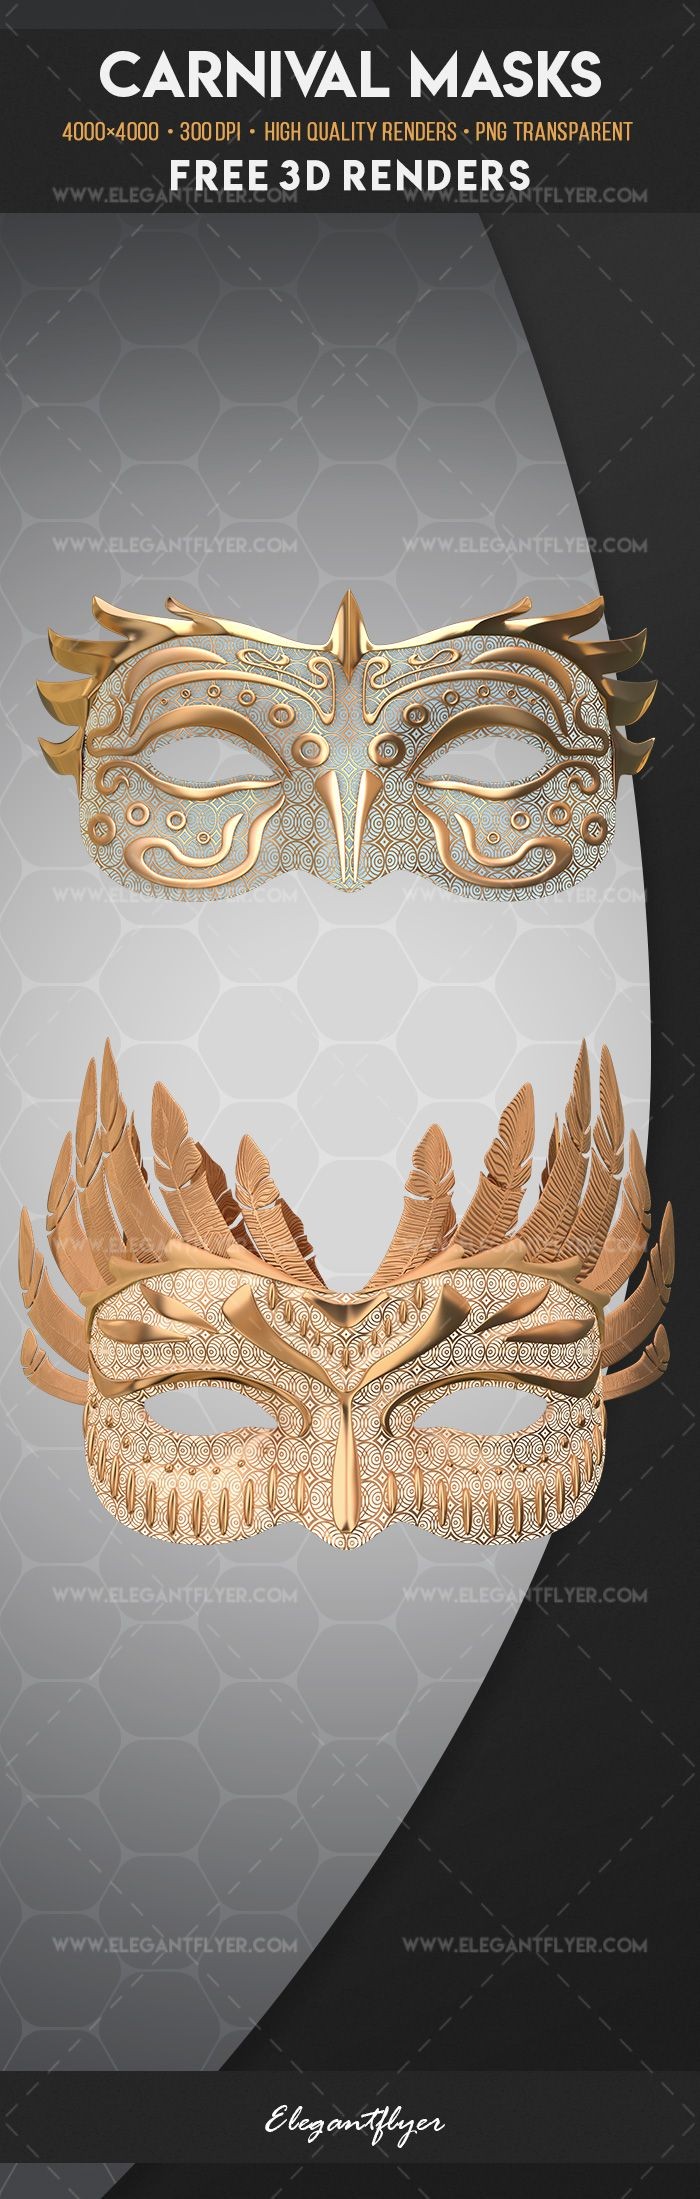 Carnival Masks by ElegantFlyer